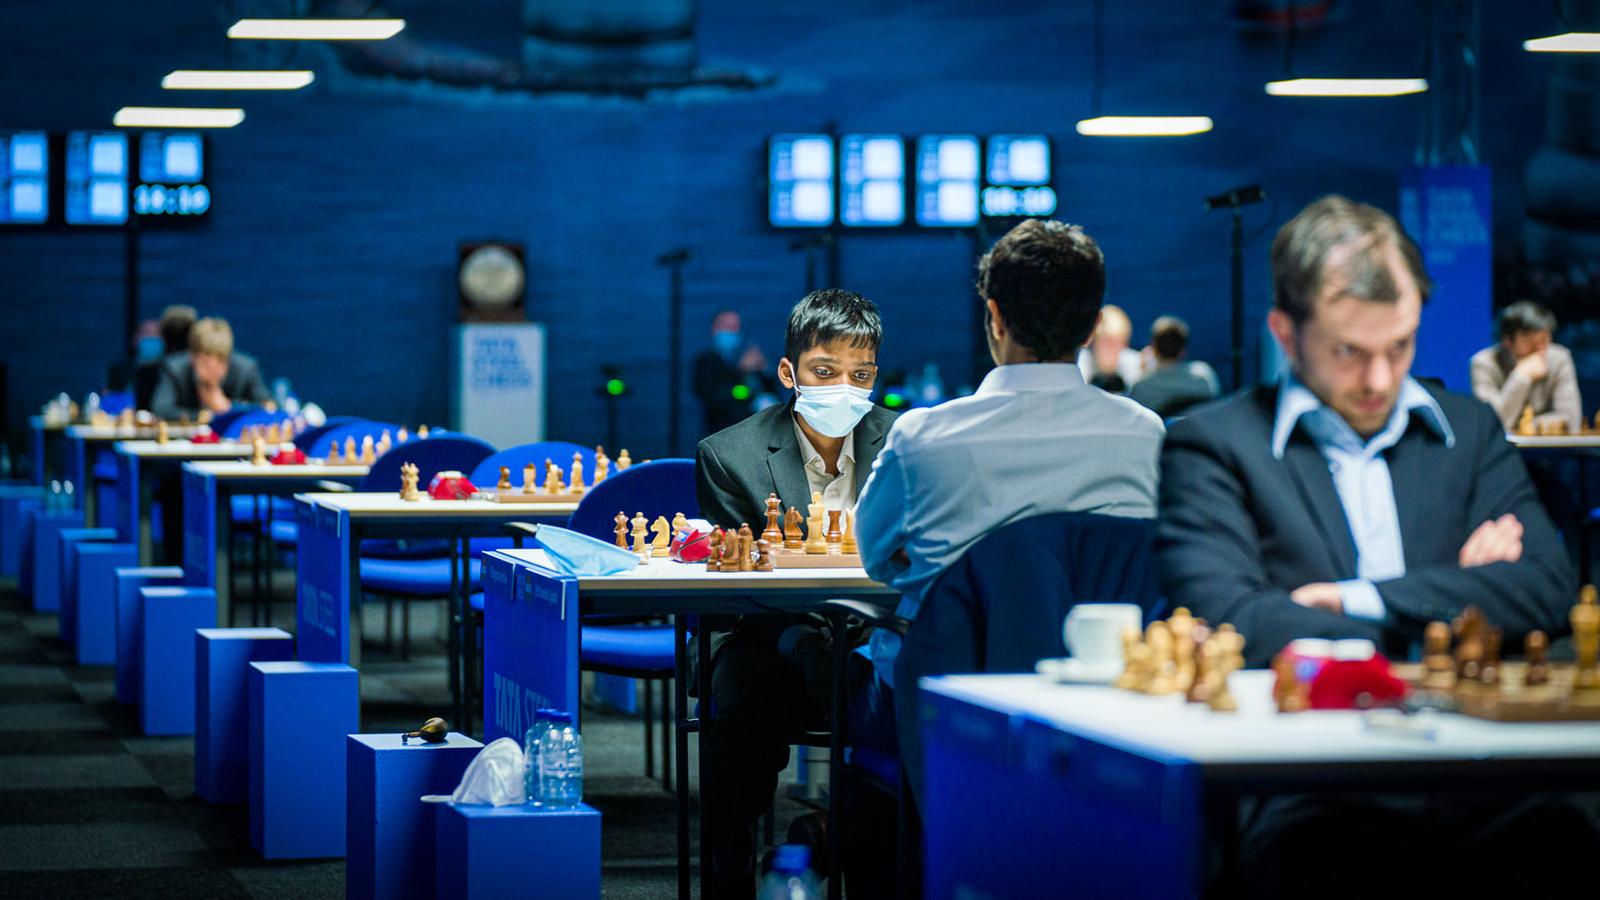 Tata Steel Chess 2022: Informações completas 